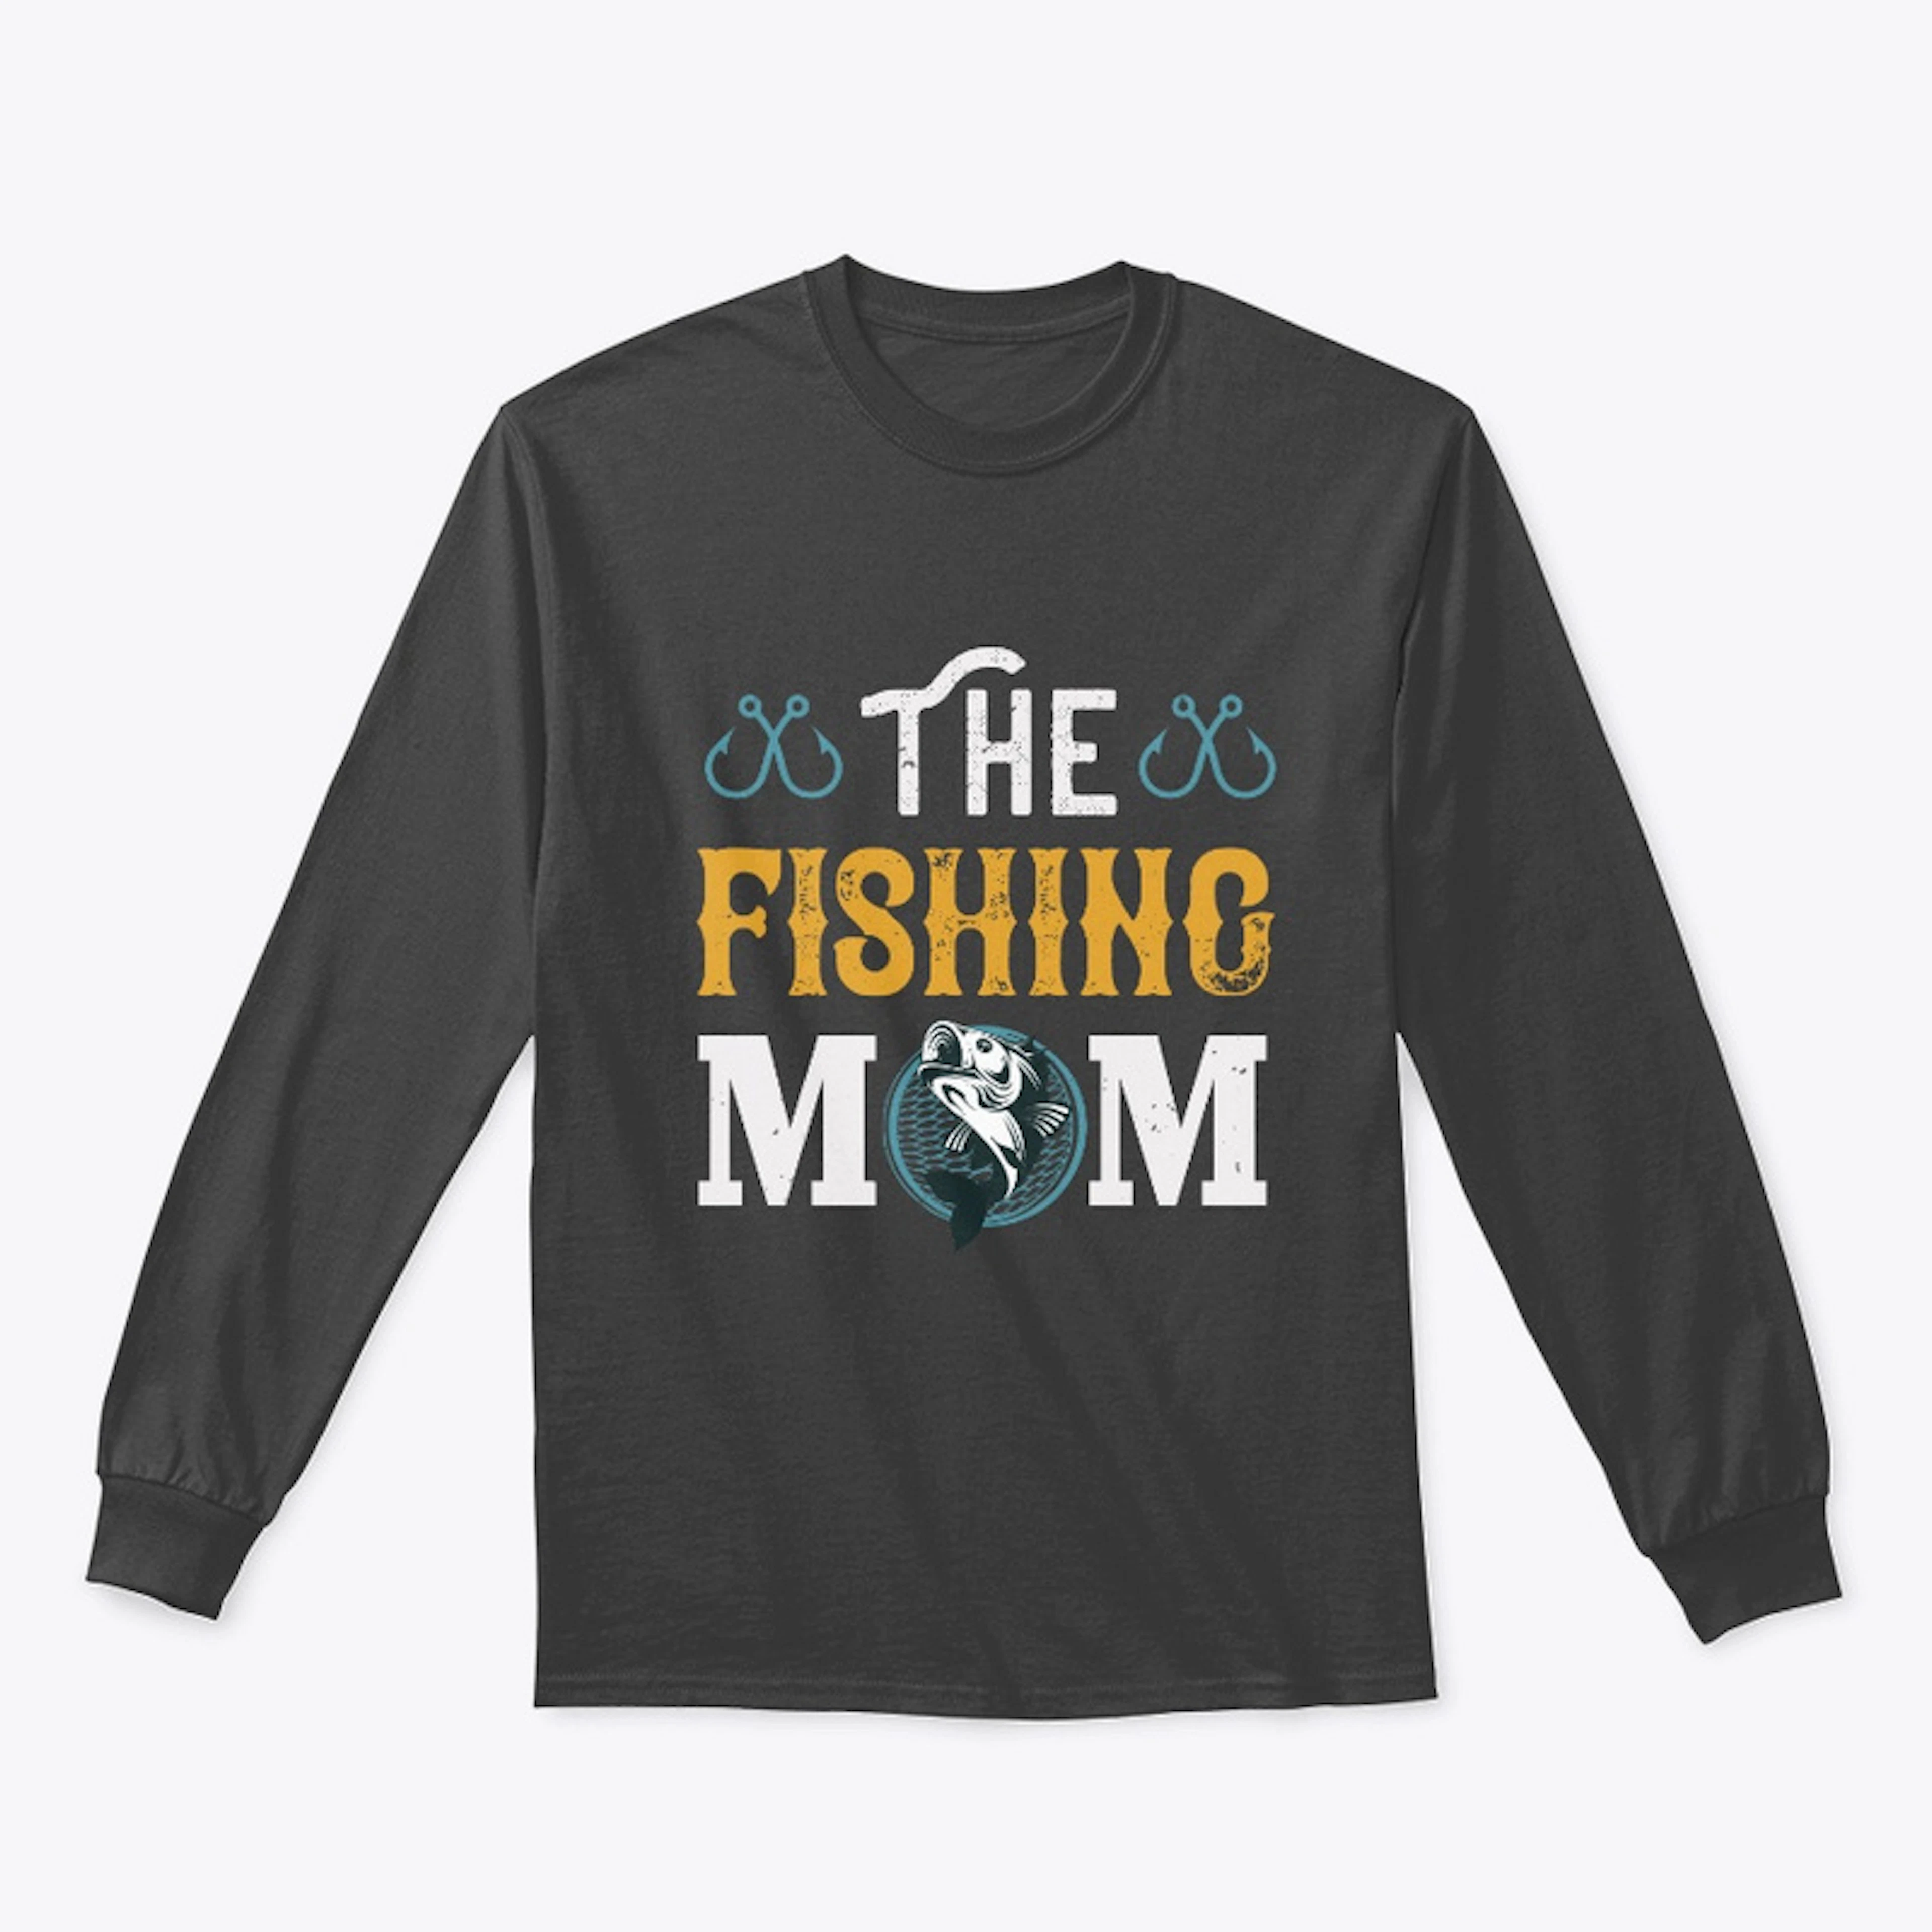 The Fishing Mom